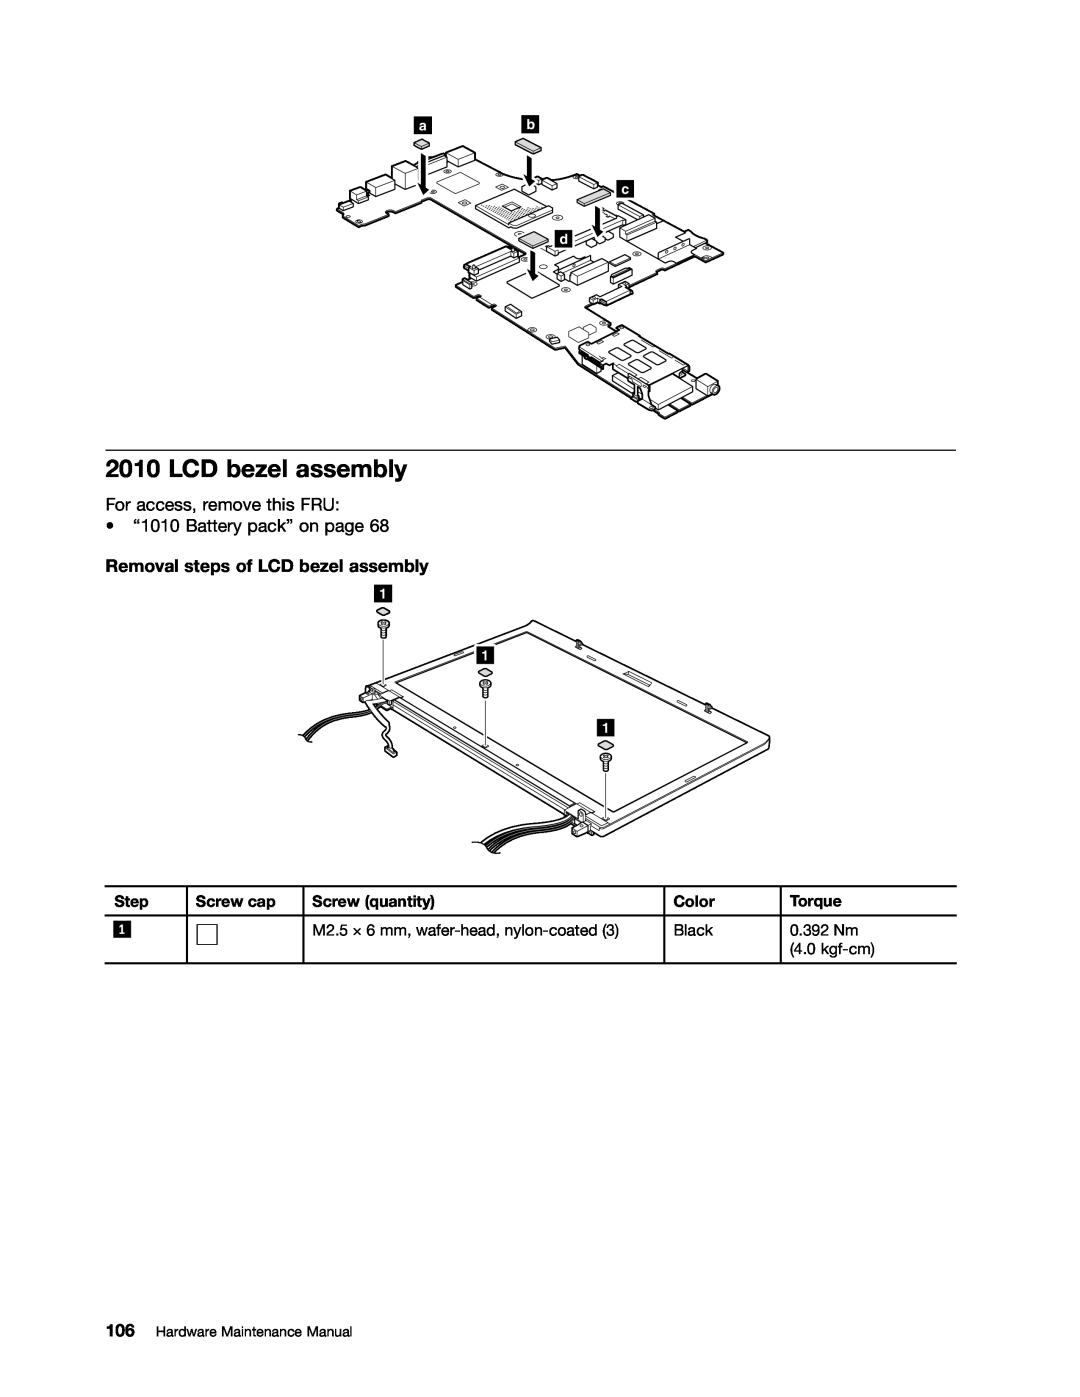 Lenovo W530, T530i, 2394F1U, 244723U manual Removal steps of LCD bezel assembly, Hardware Maintenance Manual 